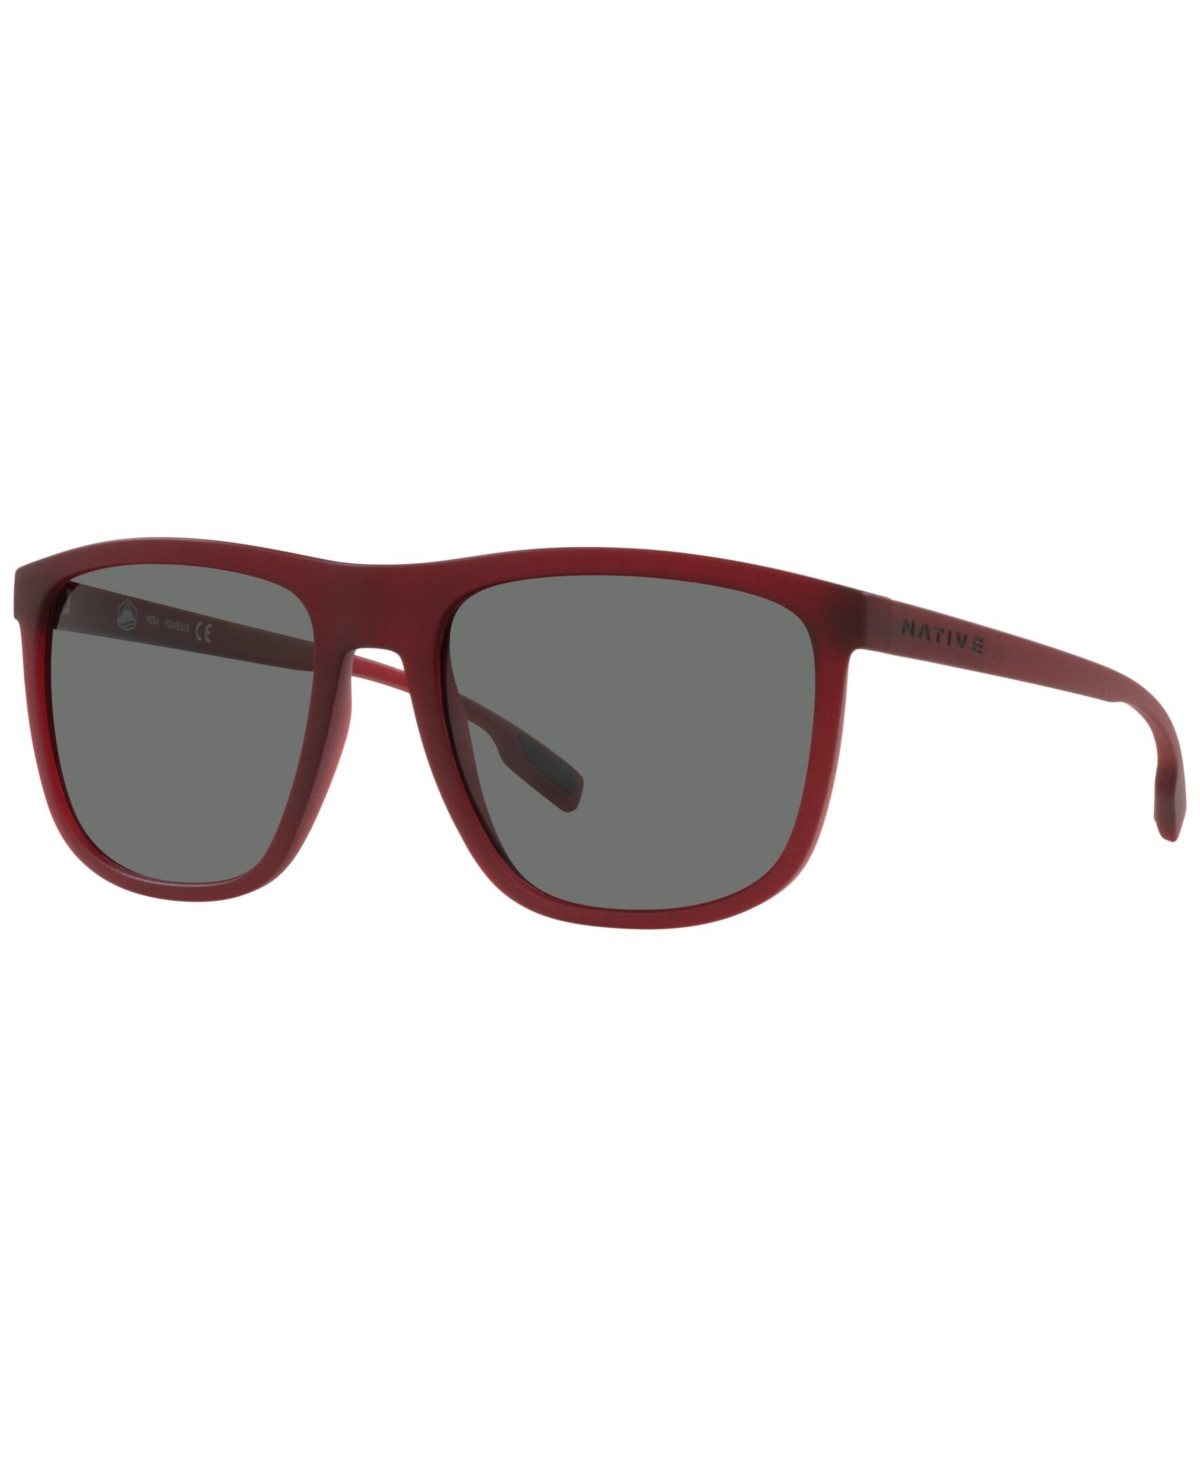 Native Unisex Polarized Sunglasses, XD9036 Mesa 57 - Matte Red Rock